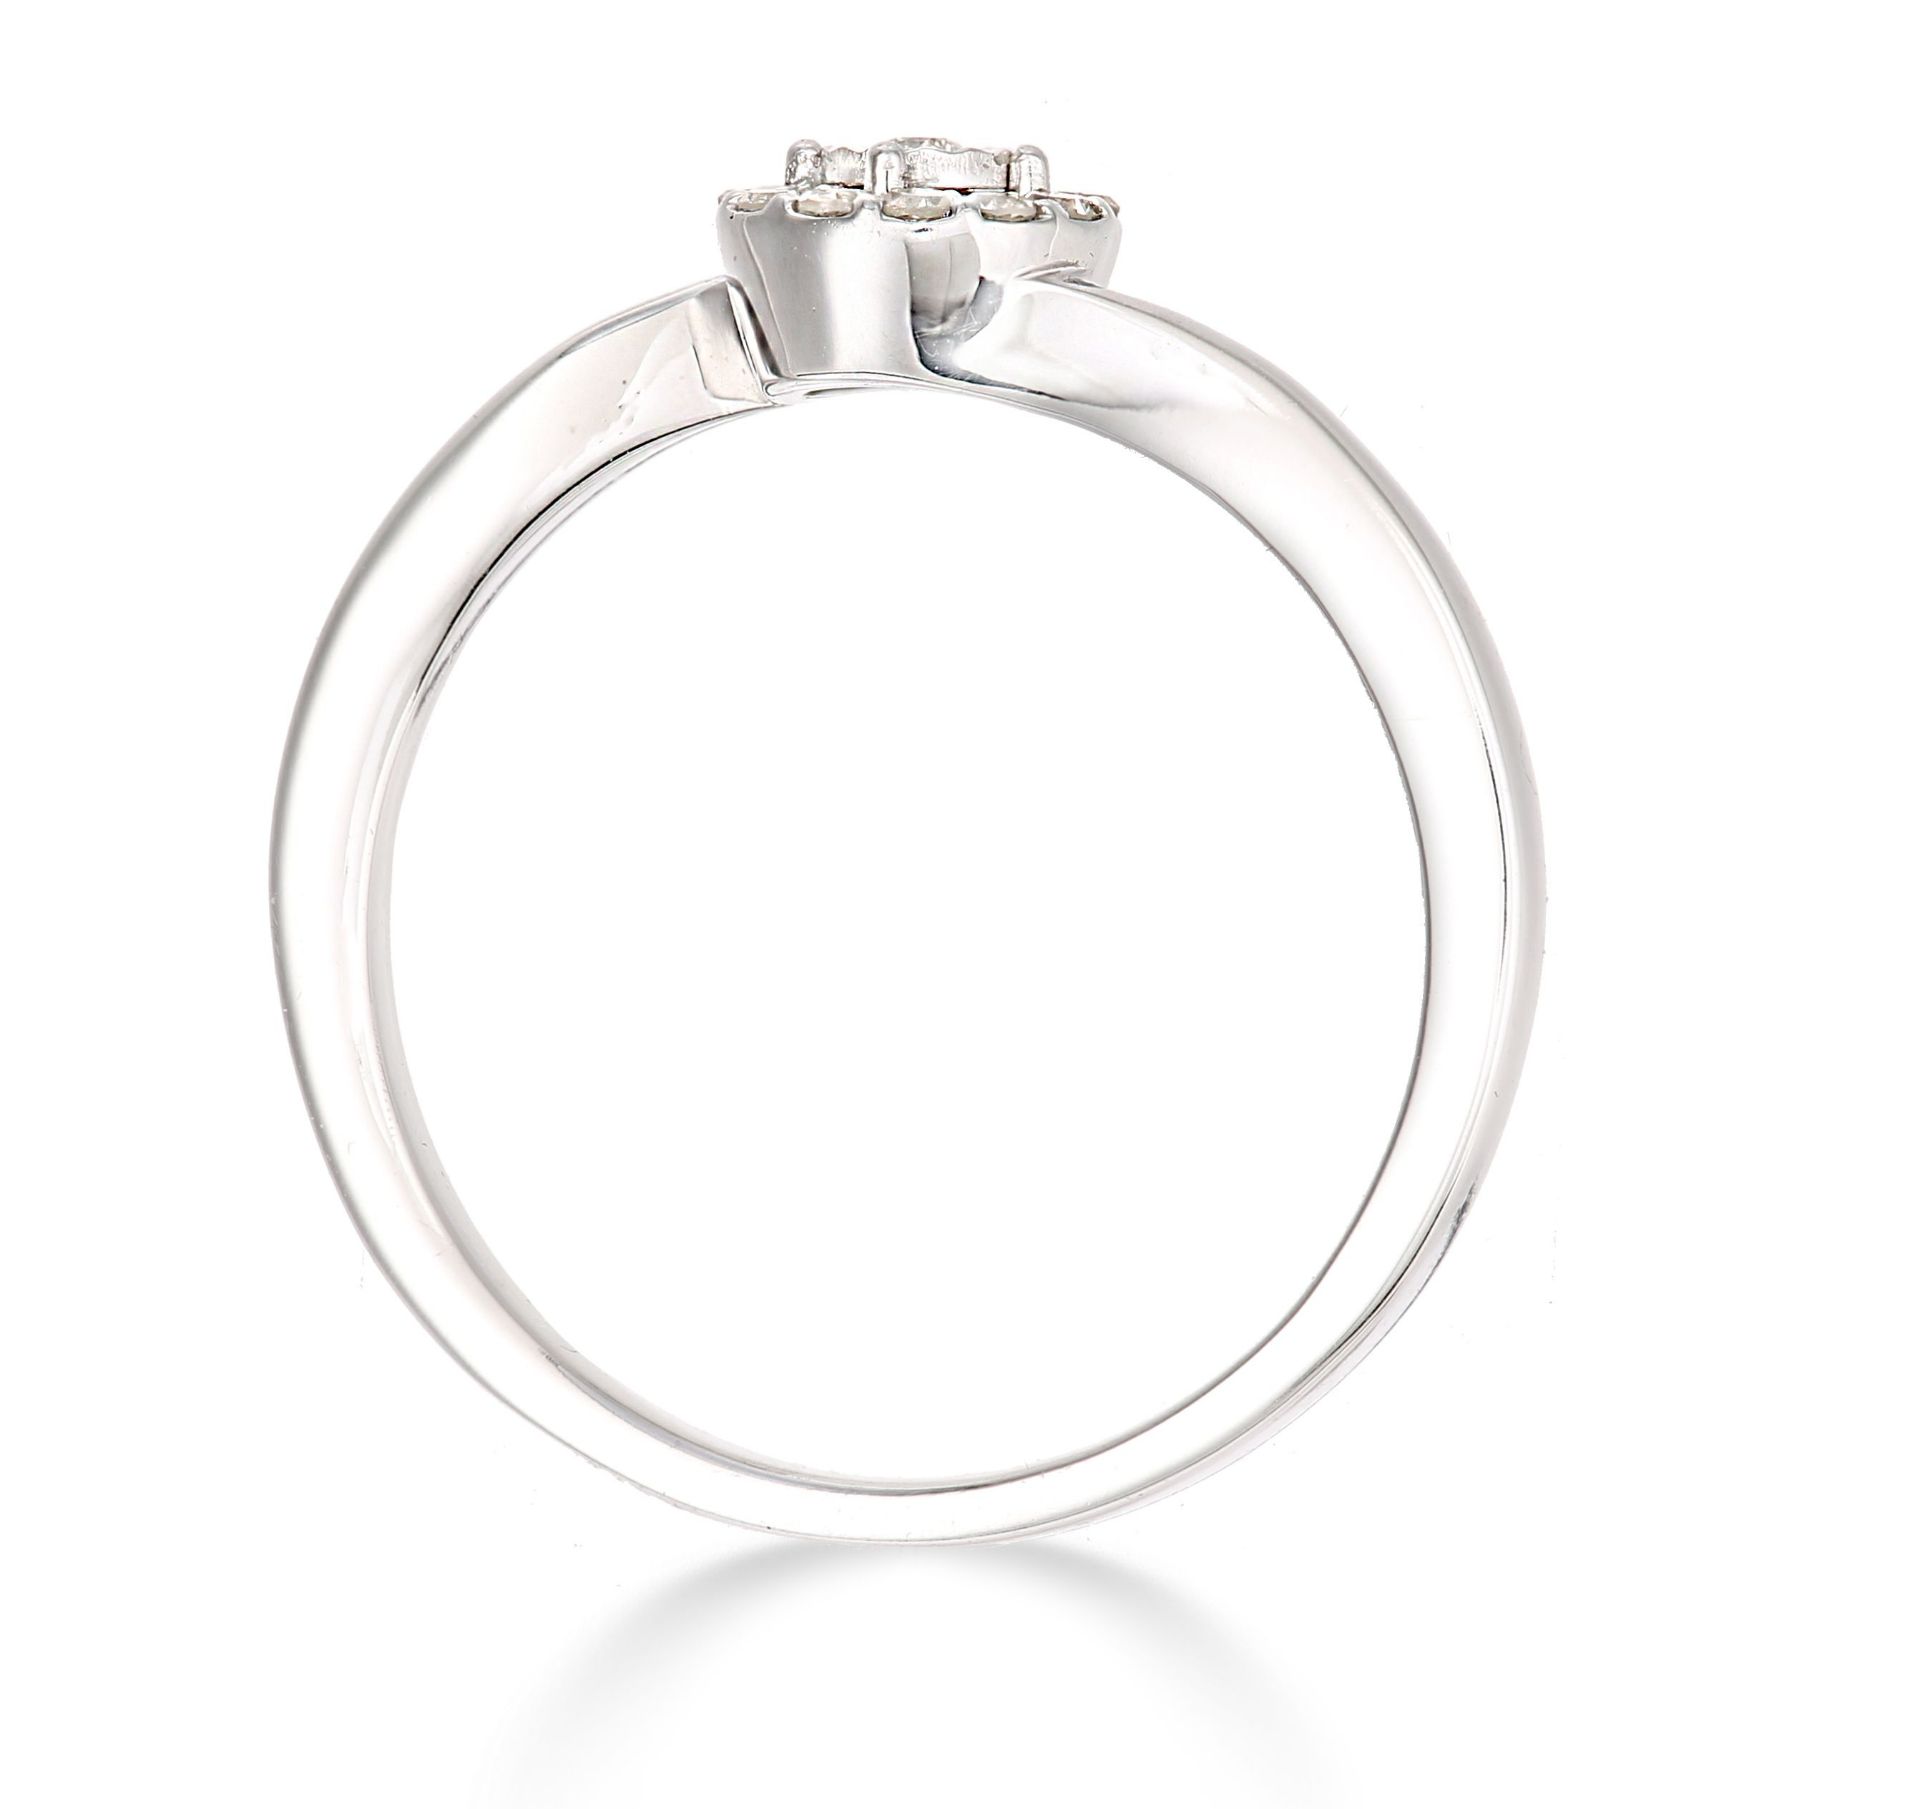 White Gold Diamond Ring with subtle twist Size K RRP £550 (UR4362B